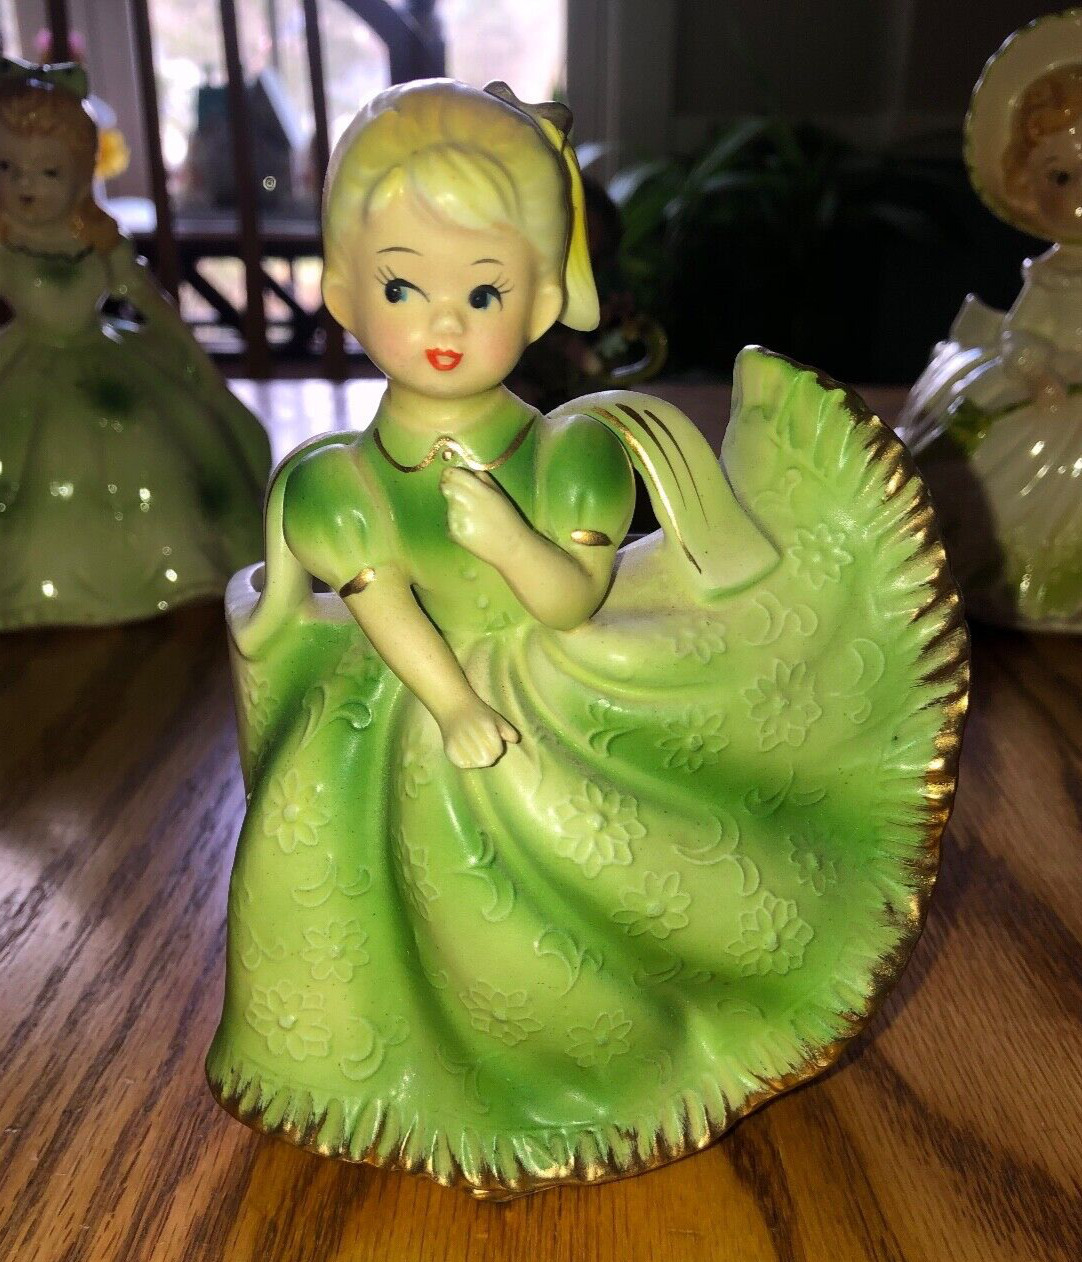 Vintage Rubens 464M Green Girl Ceramic Planter in Ruffled Dress and Hair Bow